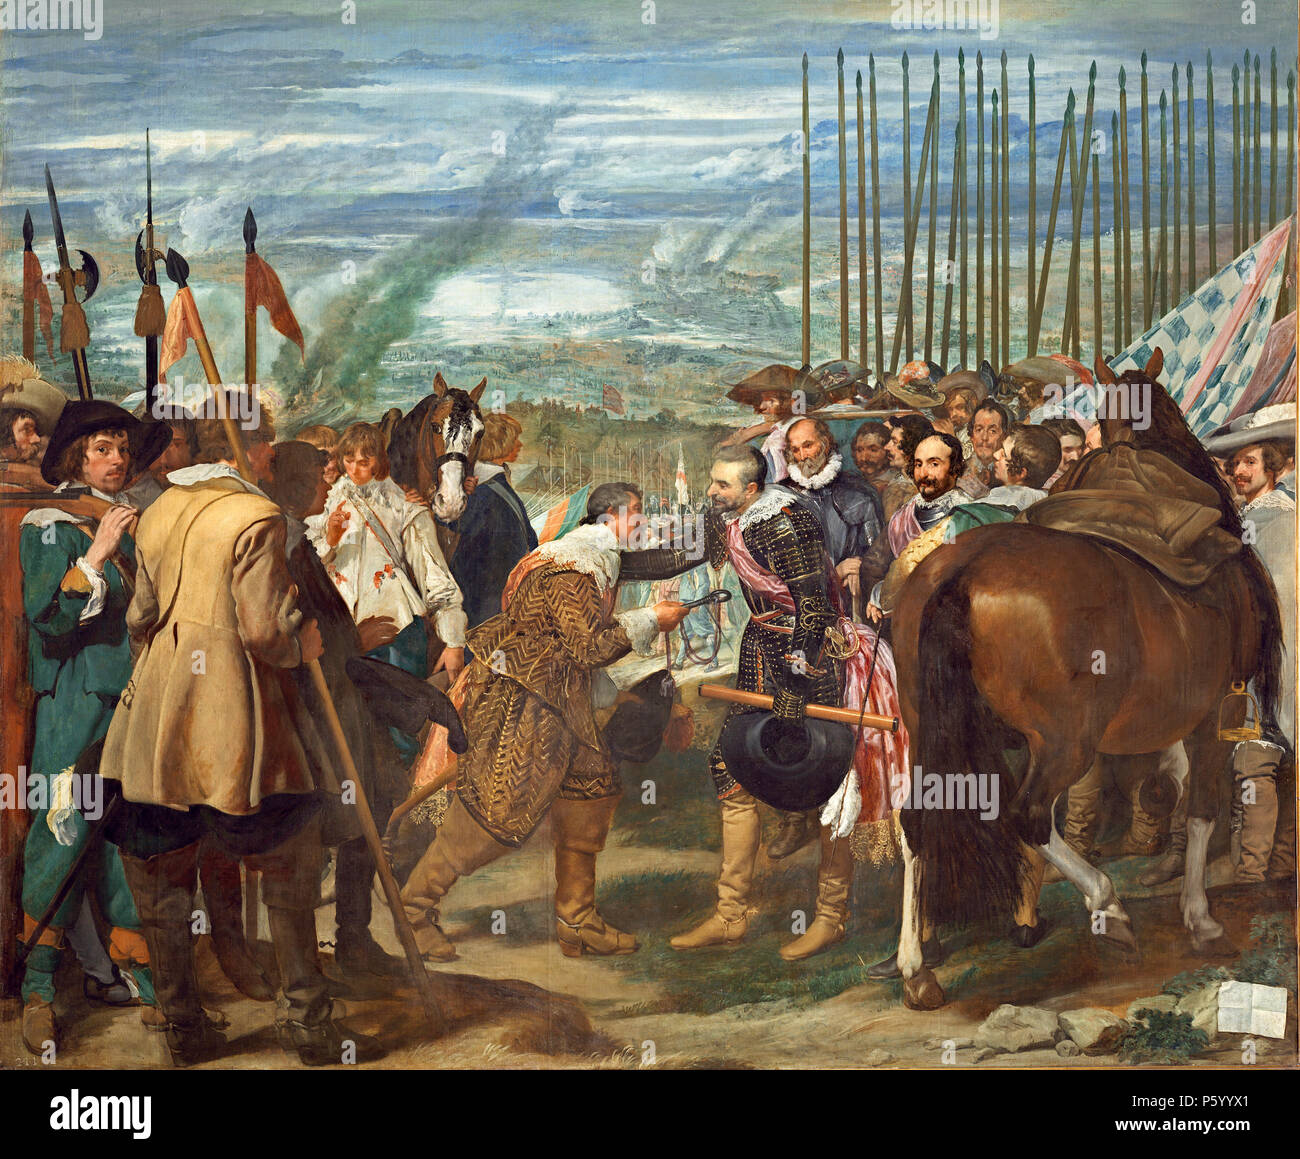 La rendición de Breda (1634 - 1635) die Übergabe von Breda von Diego Velázquez. Stockfoto